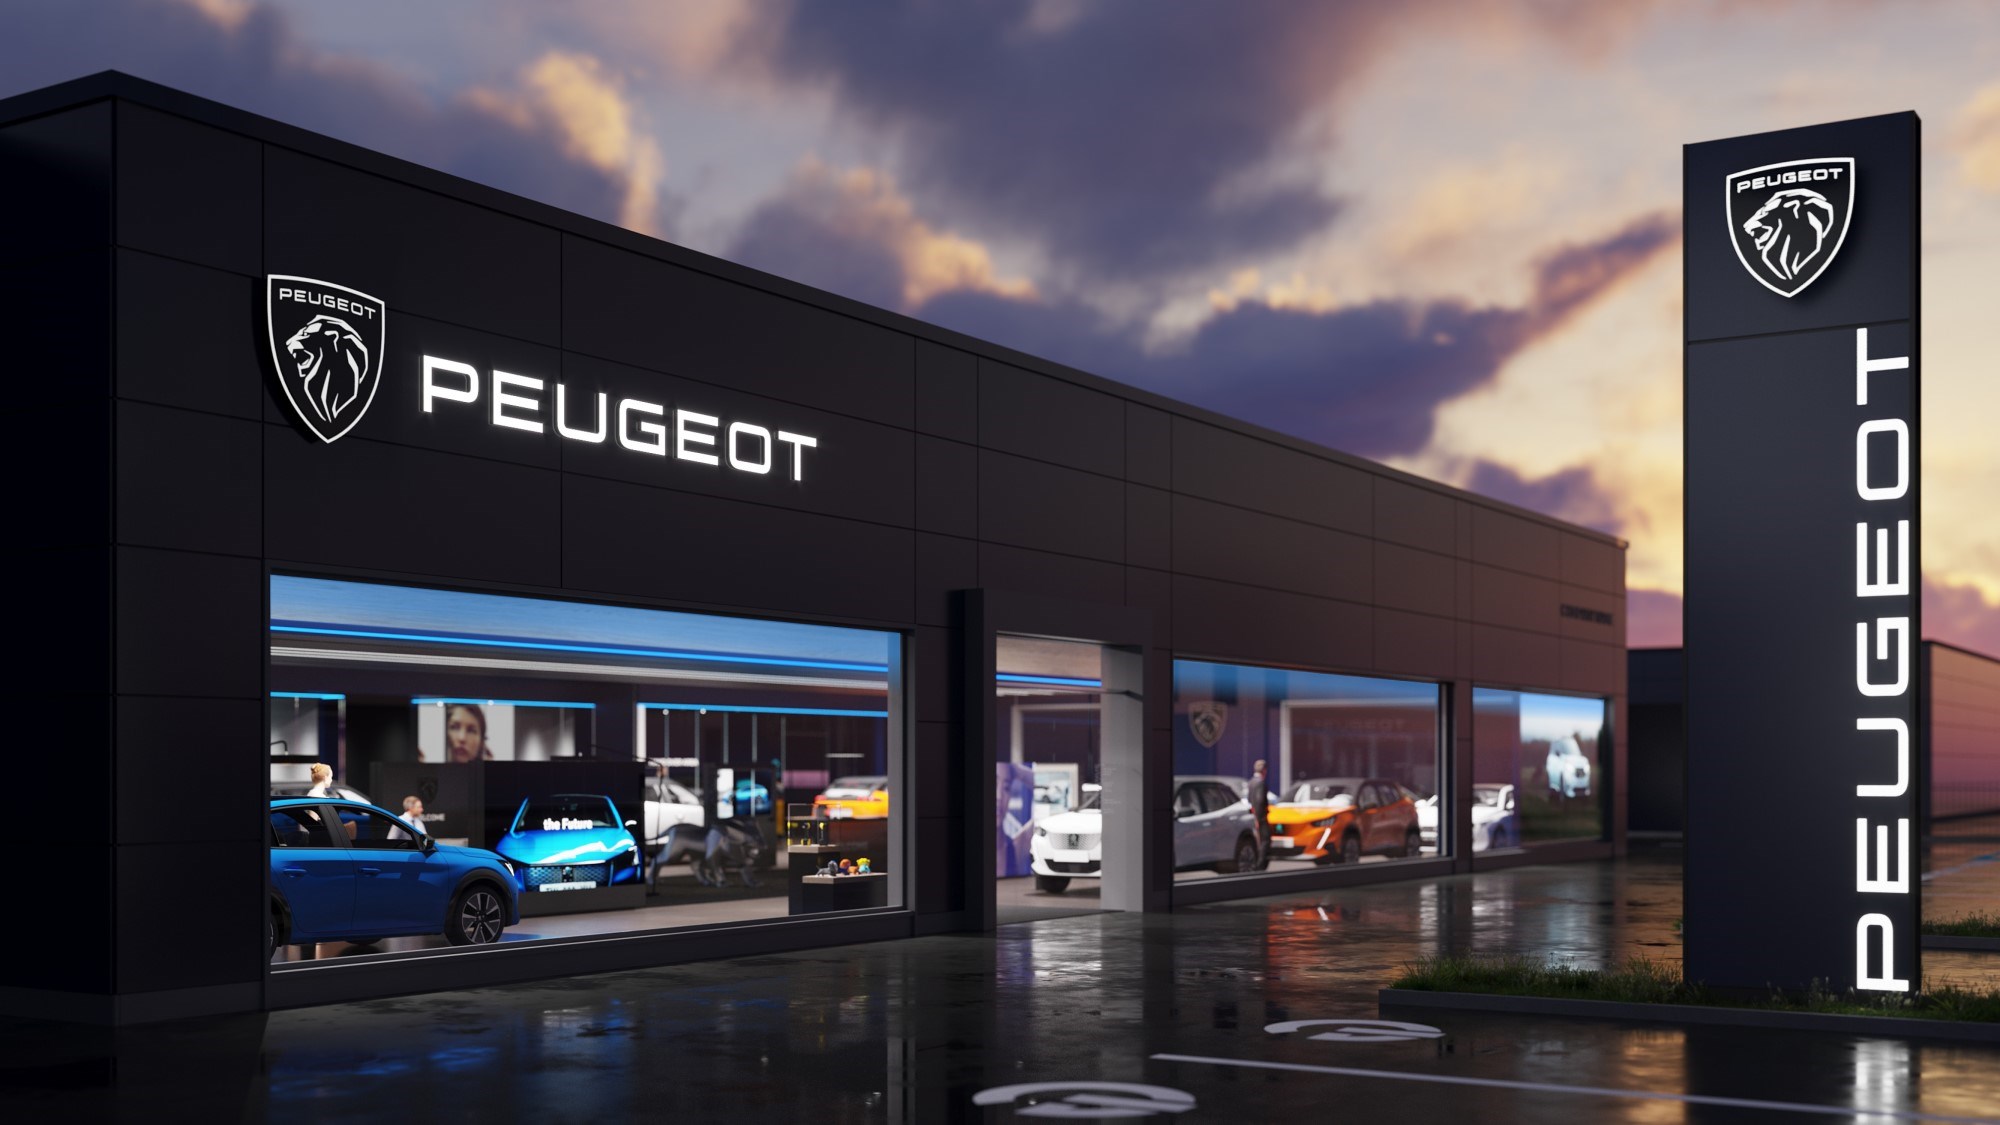 New Peugeot logo and car rebranding, it smells musky! - Graphéine